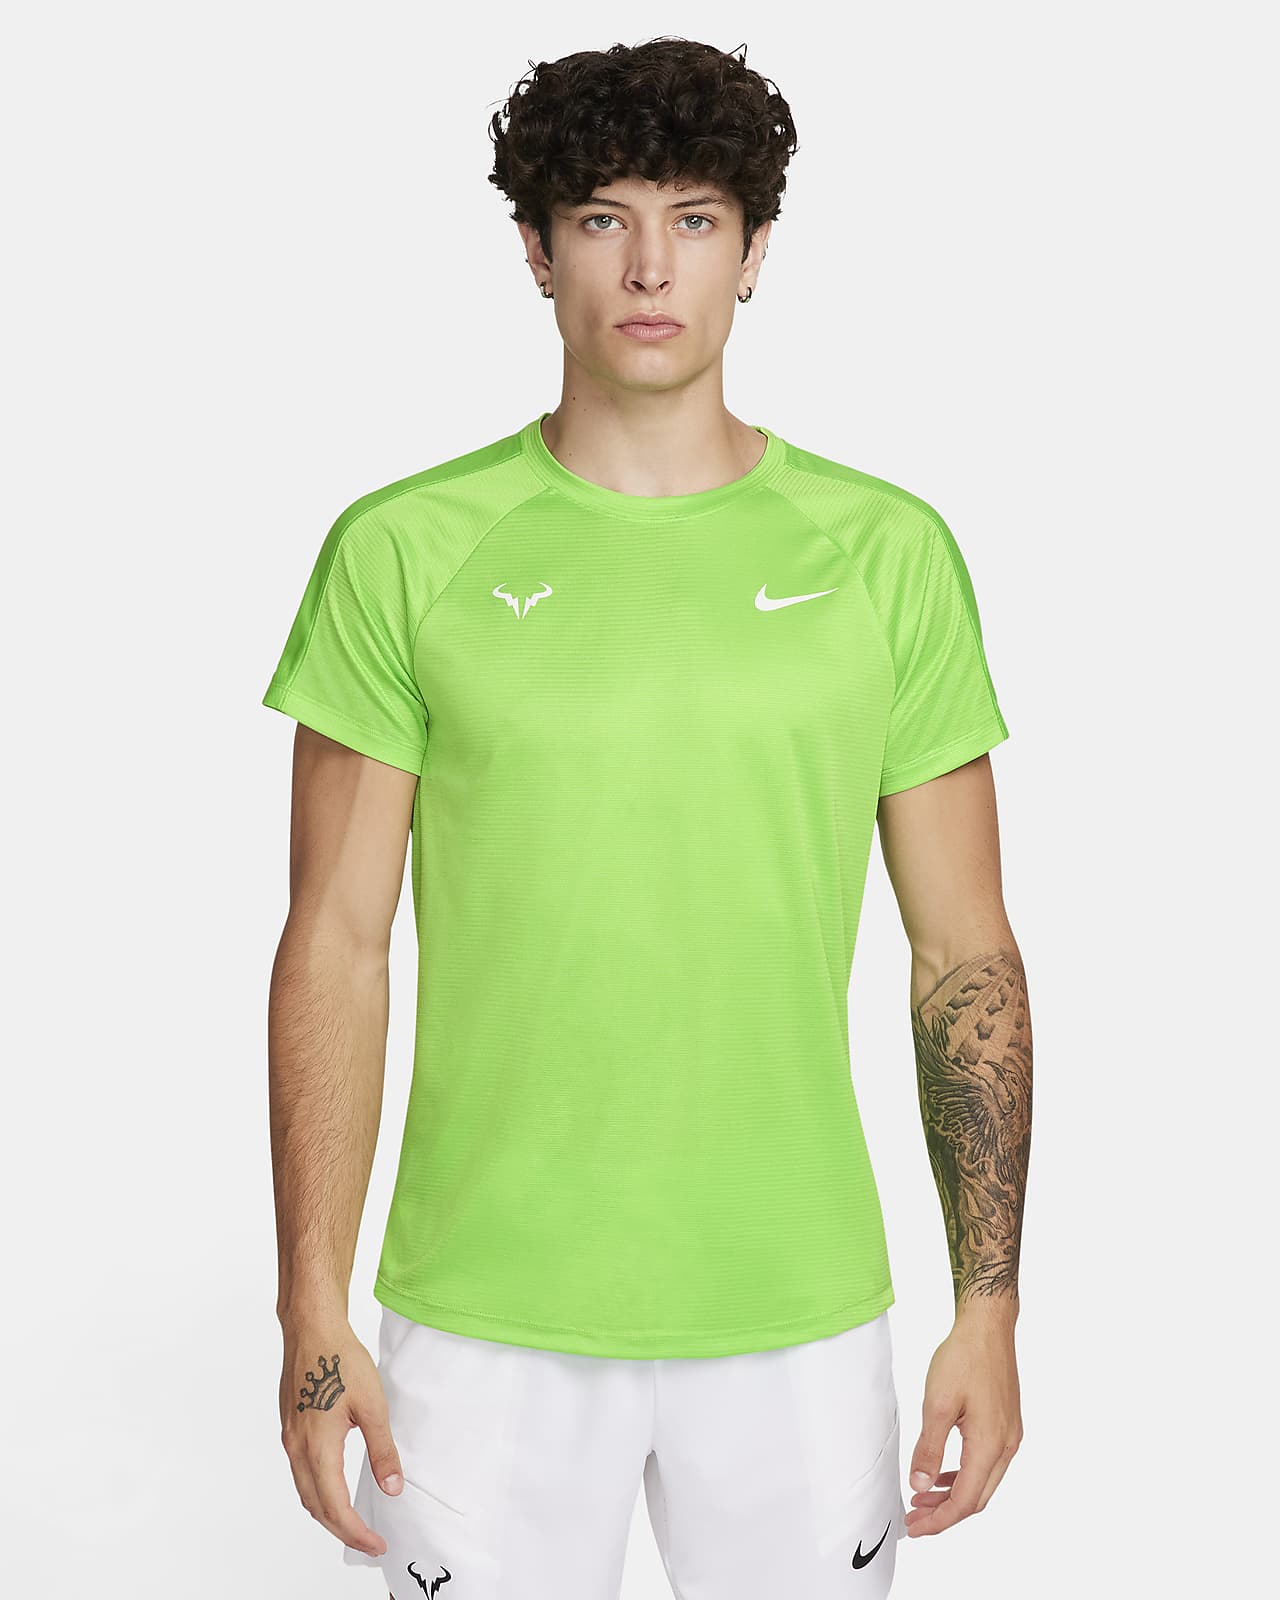 Rafa Challenger Samarreta de màniga curta Nike Dri-FIT de tennis - Home